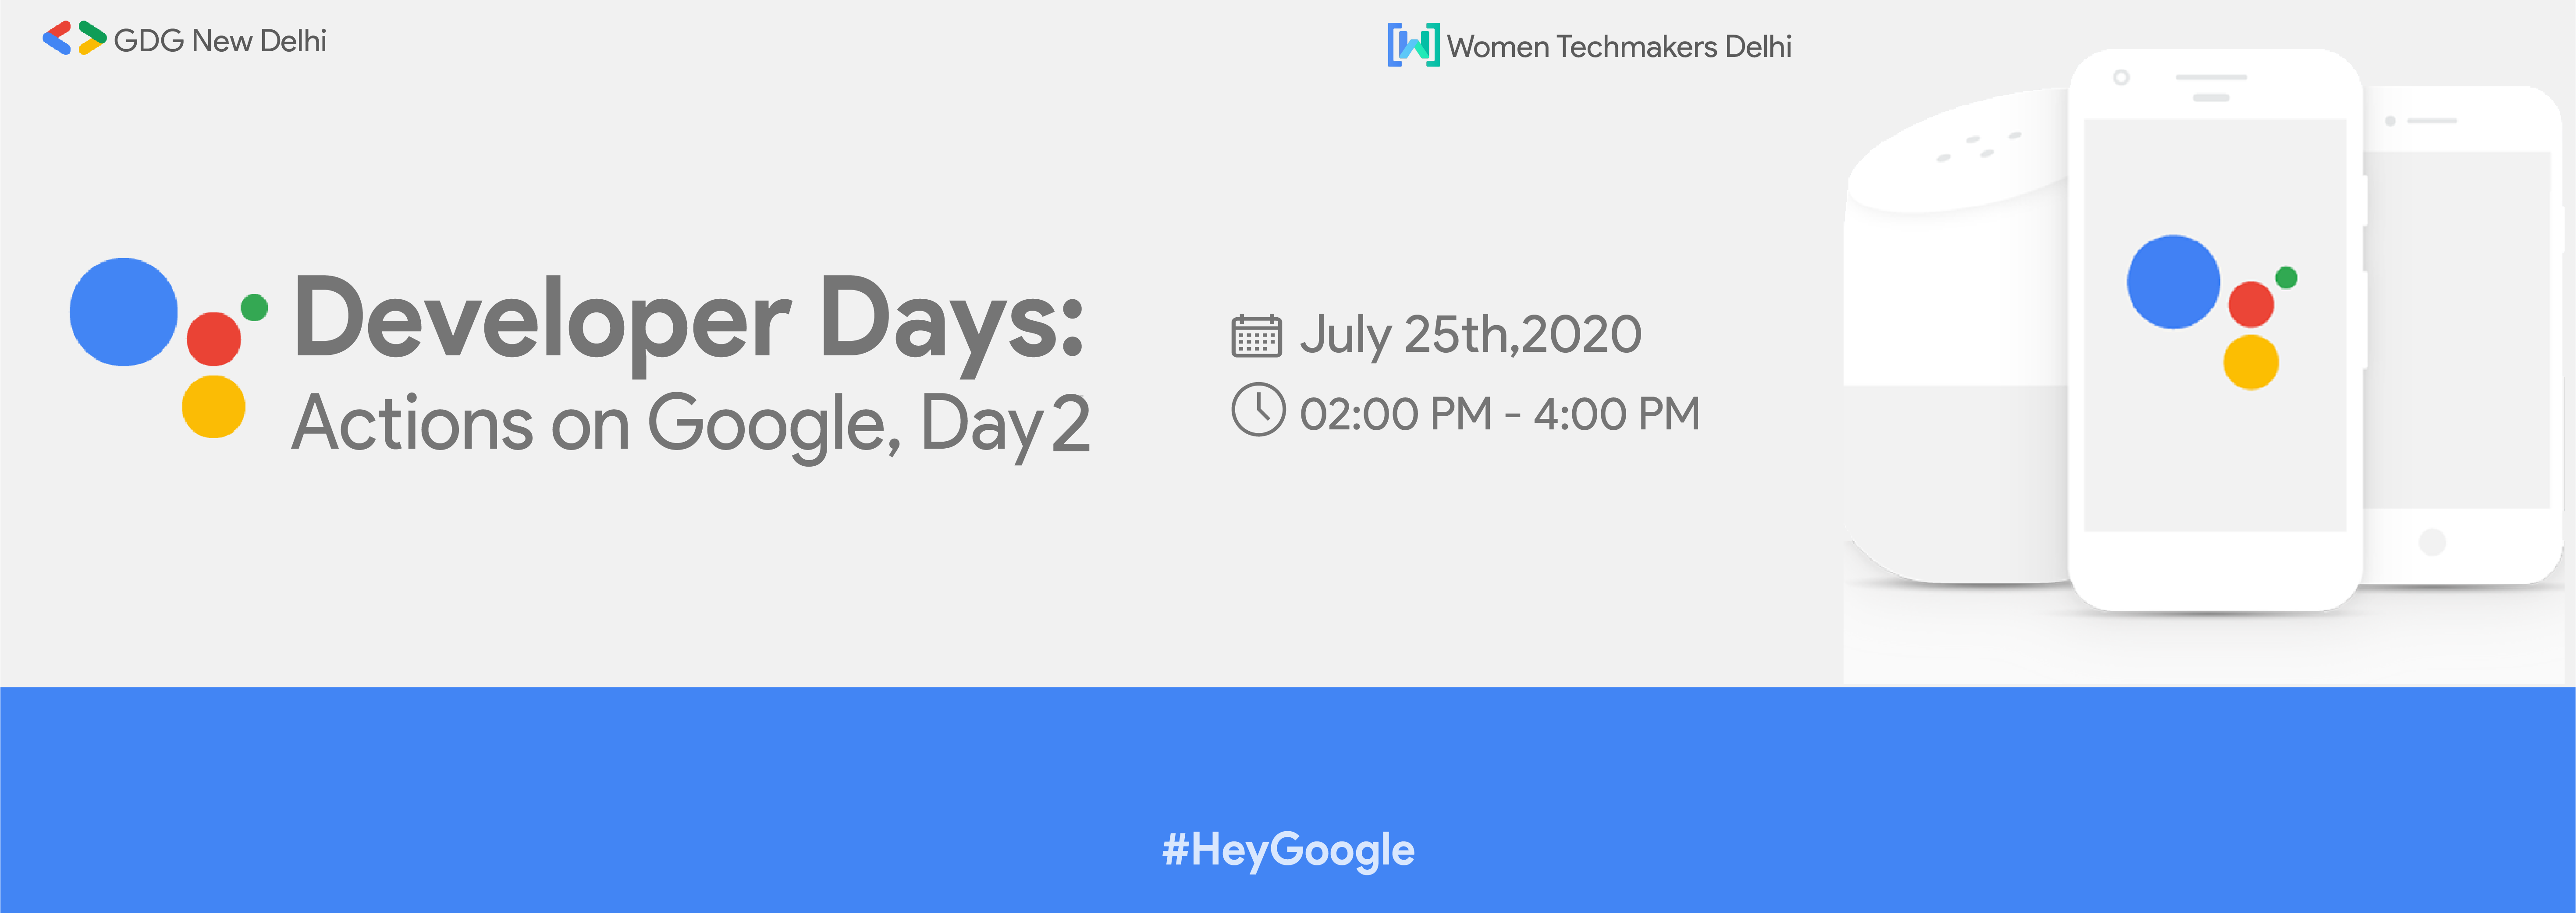 Developer Days: Actions on Google - Day 2